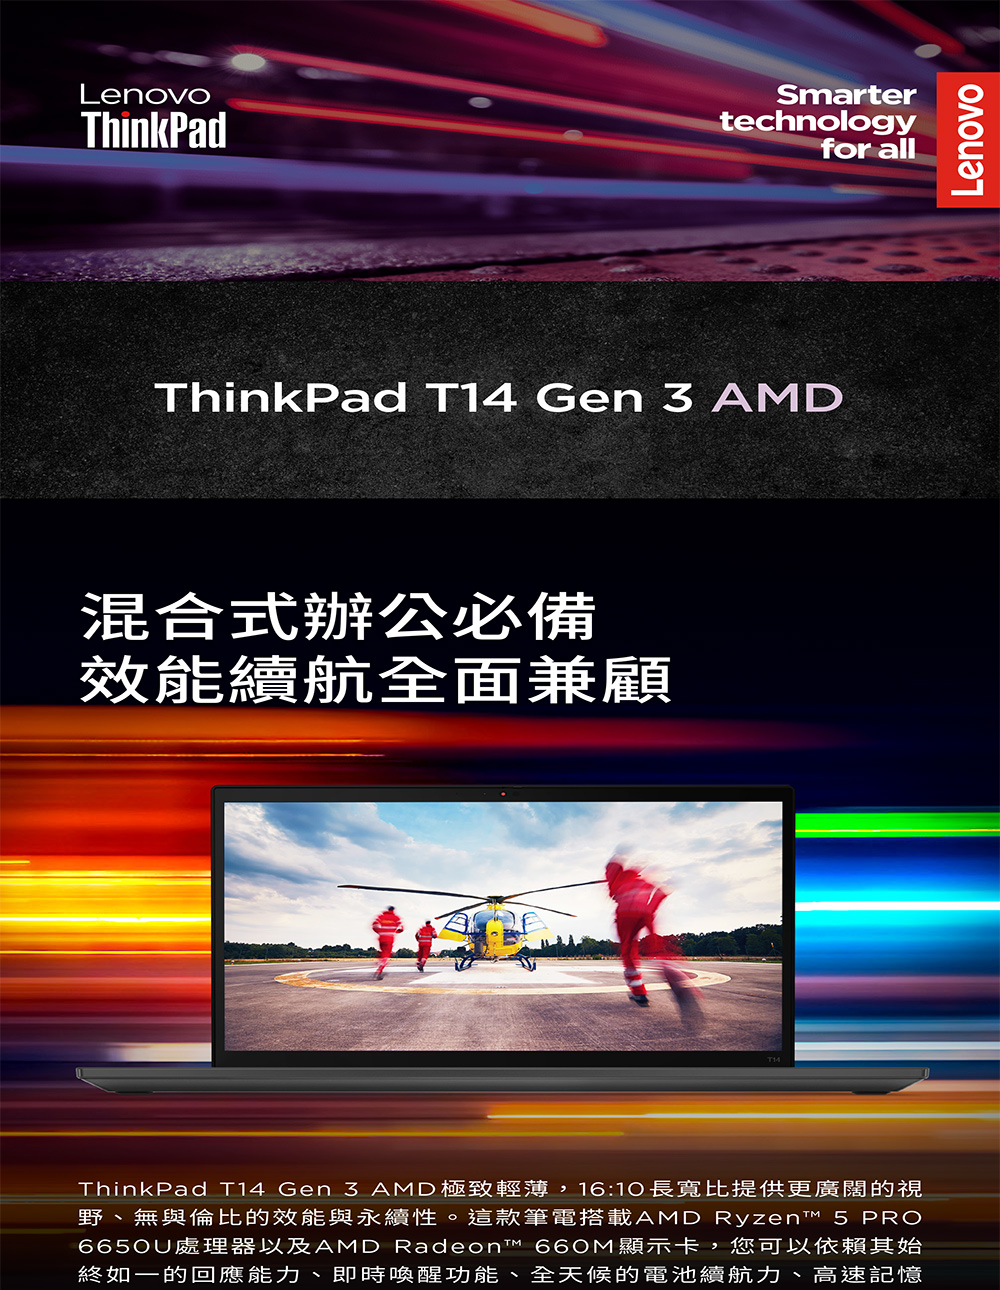 LenovoThinkPadSmartertechnologyfor allThinkPad T14 Gen  AMD混合式辦公必備效能續航全面兼顧ThinkPad T14 Gen 3 AMD極致輕薄,16:10長寬比提供更廣闊的視野、無與倫比的效能與永續性。這款筆電搭載AMD Ryzen™ 5 PRO6650U處理器以及AMD Radeon™ 660M顯示卡,您可以依賴其始終如一的回應能力、即時喚醒功能、全天候的電池續航力、高速記憶Lenovo